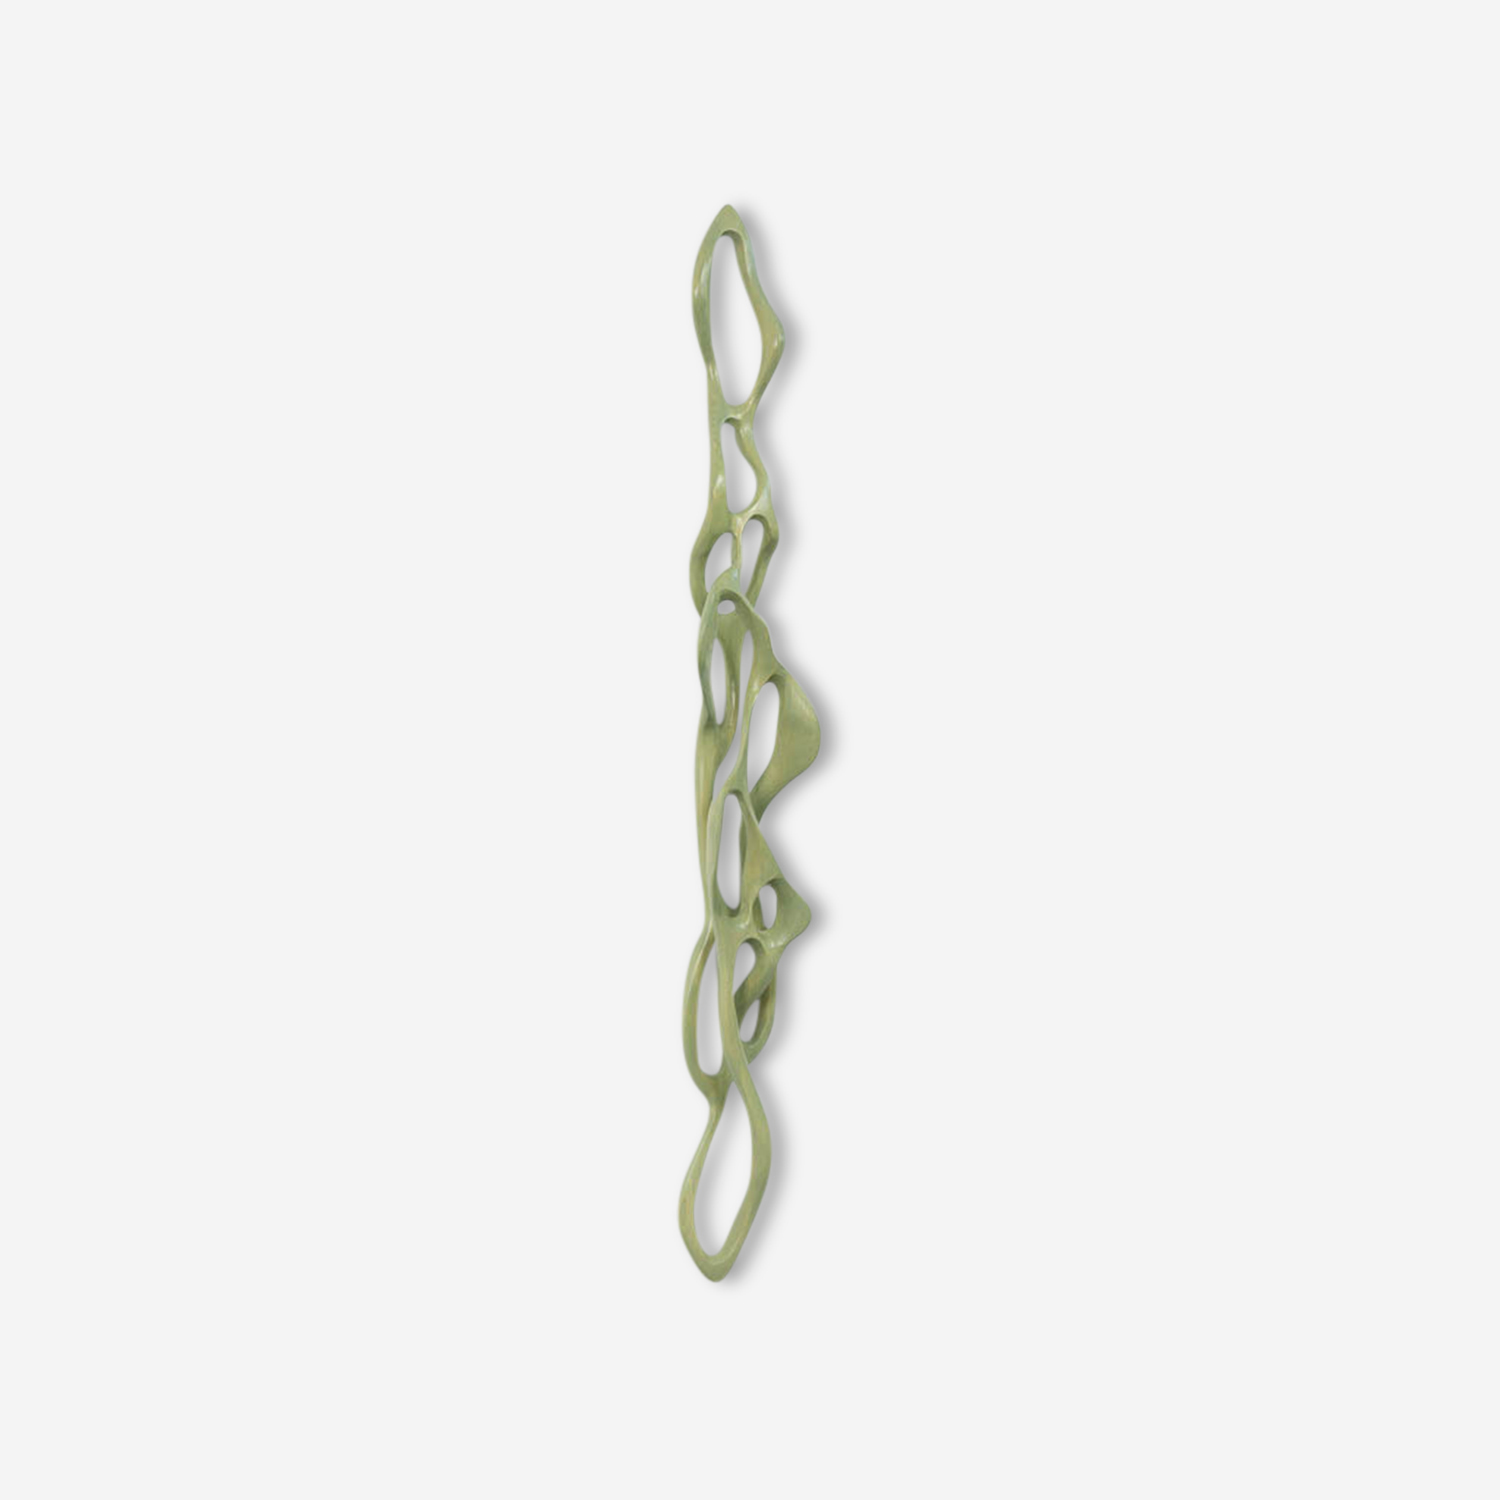 Jade Linear Loop copy